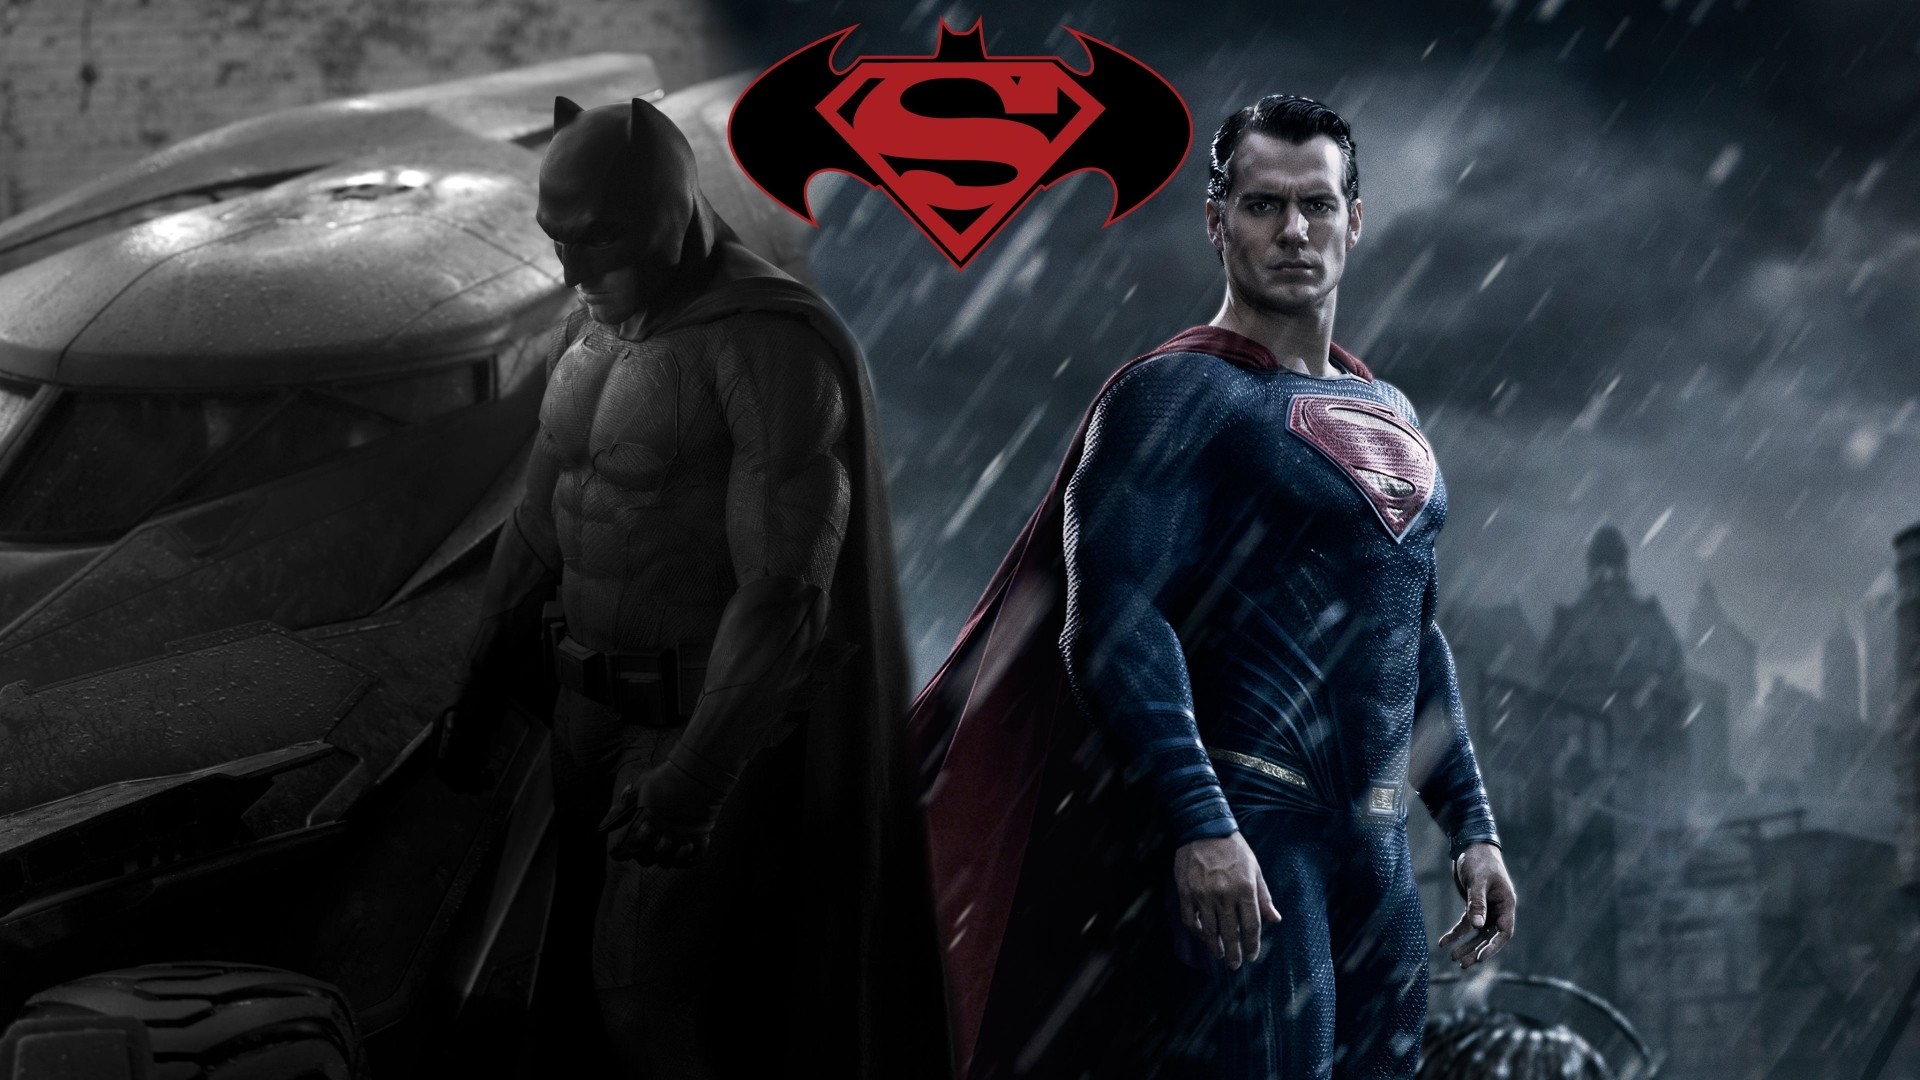 1920x1080 Batman vs Superman Fan Art 1920 x 1080 HDTV 1080p Wallpaper